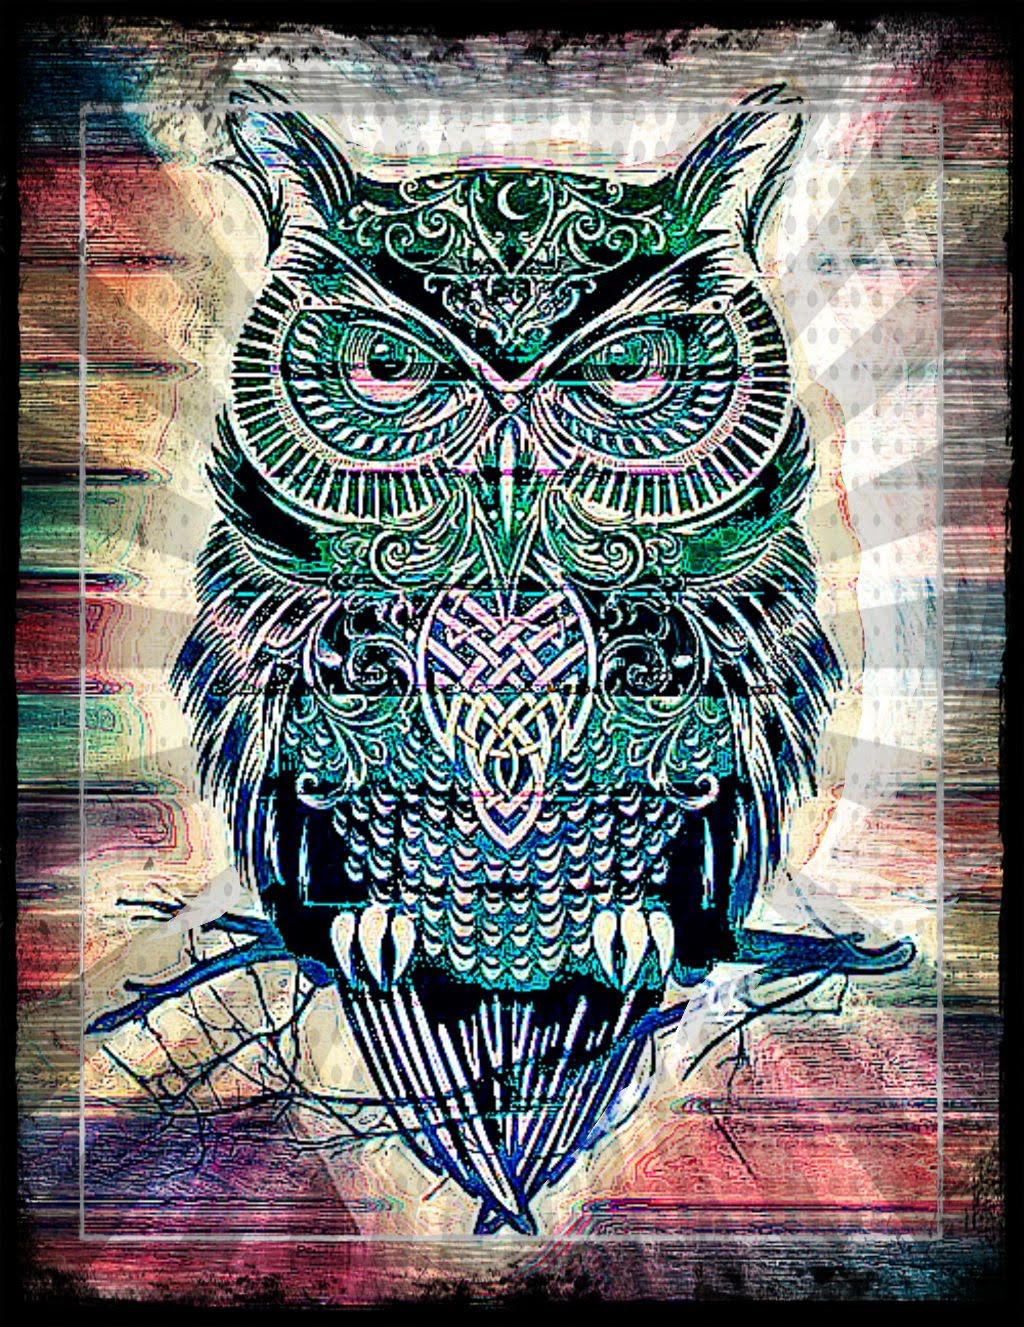 Wailing Owl by Luke Dague